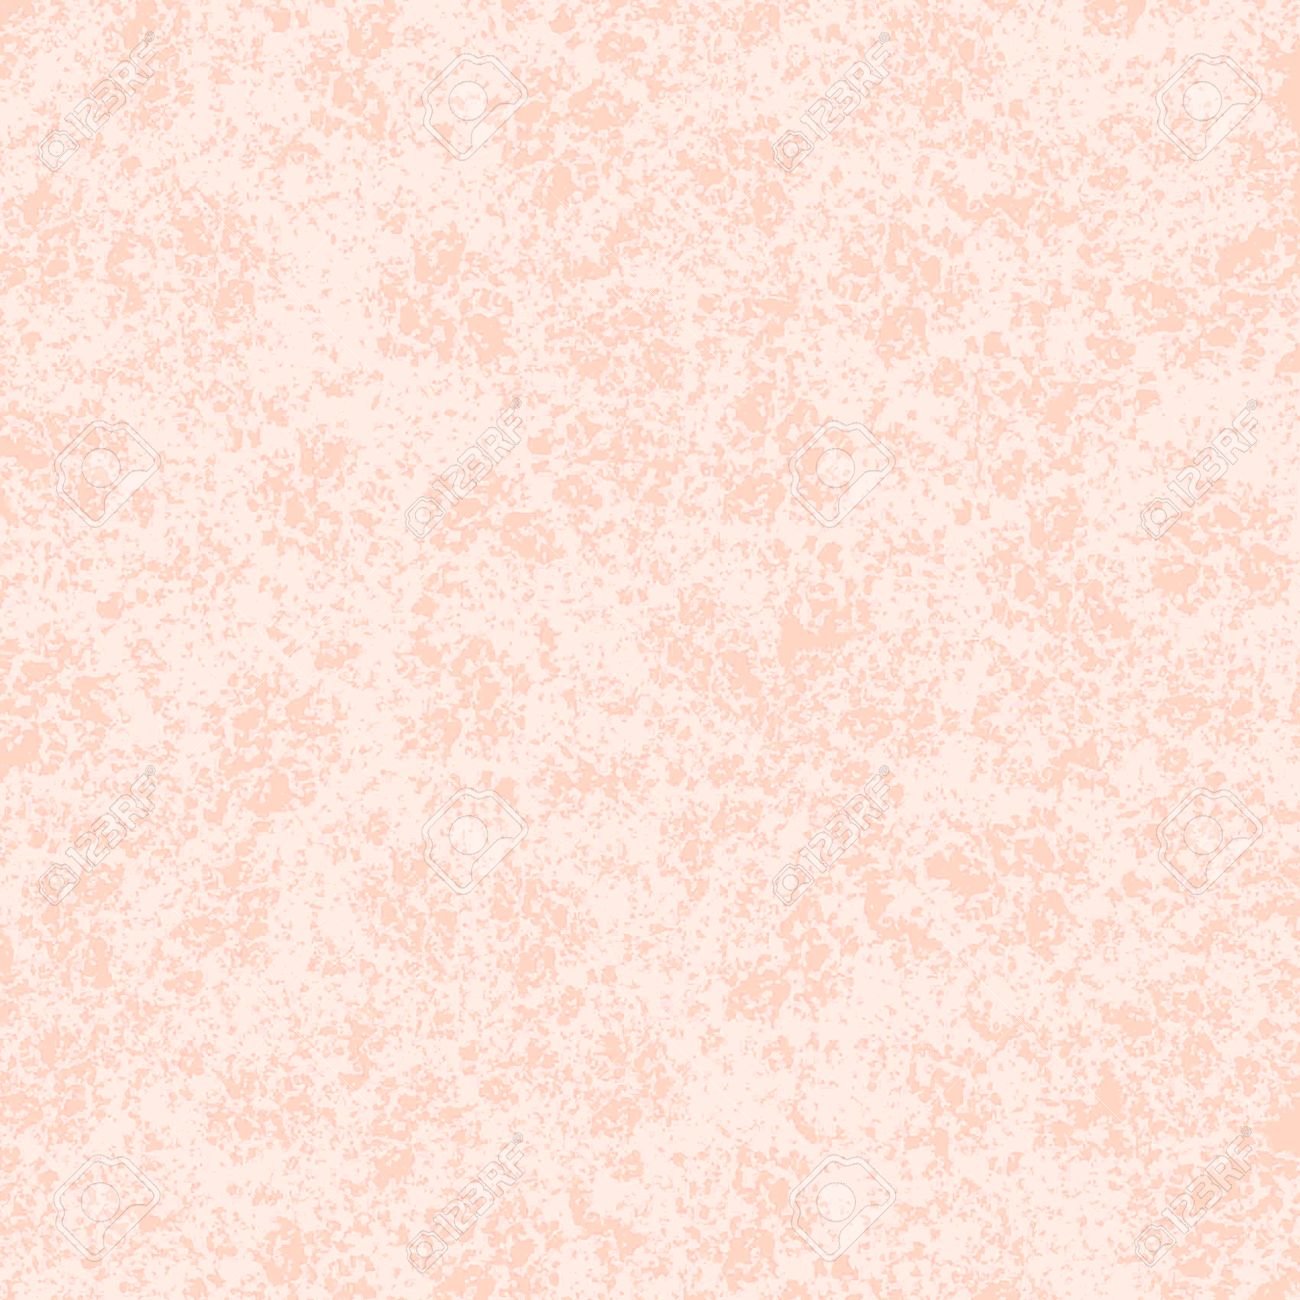 Soft Peach Orange Background With White Sponge Texture Stock Photo 1300x1300